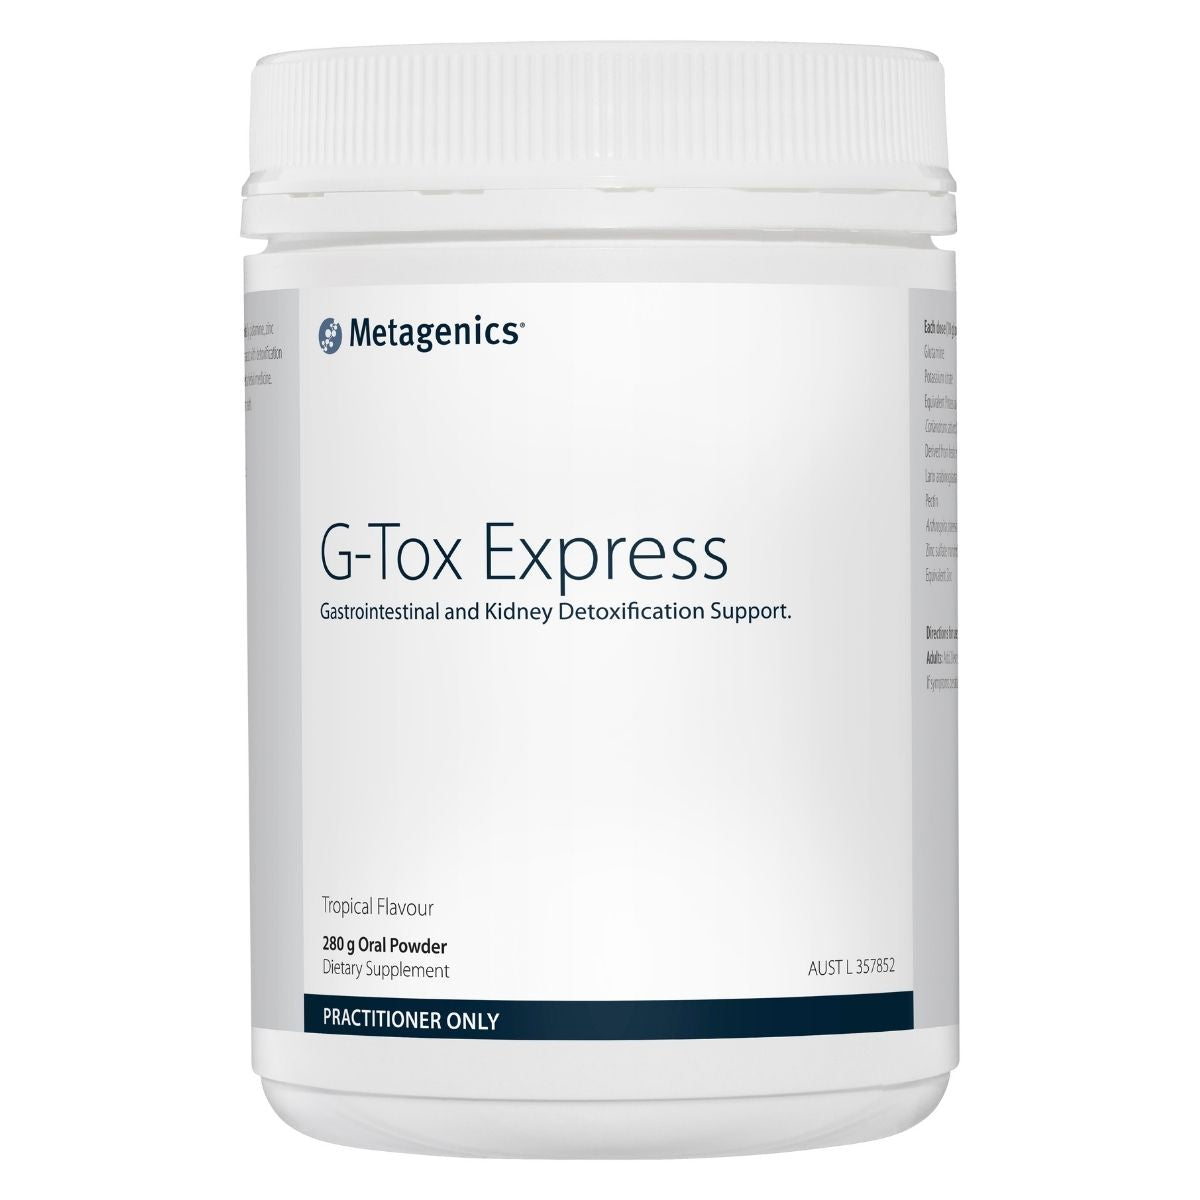 Metagenics G-Tox Express